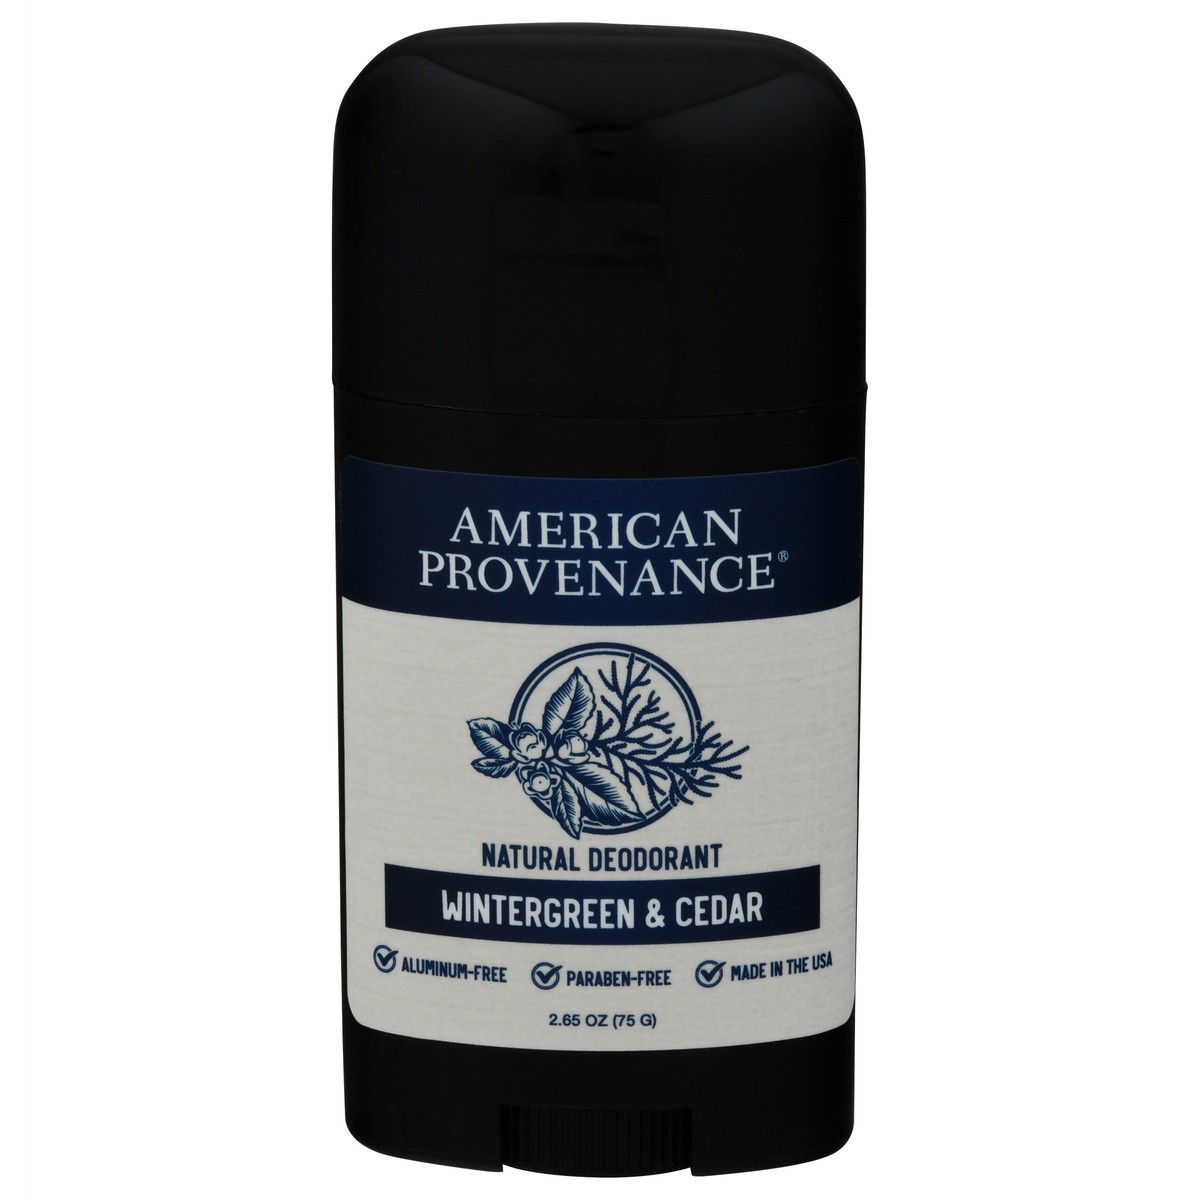 slide 6 of 13, American Provenance Wintergreen & Cedar Natural Deodorant 2.65 oz, 2.65 oz